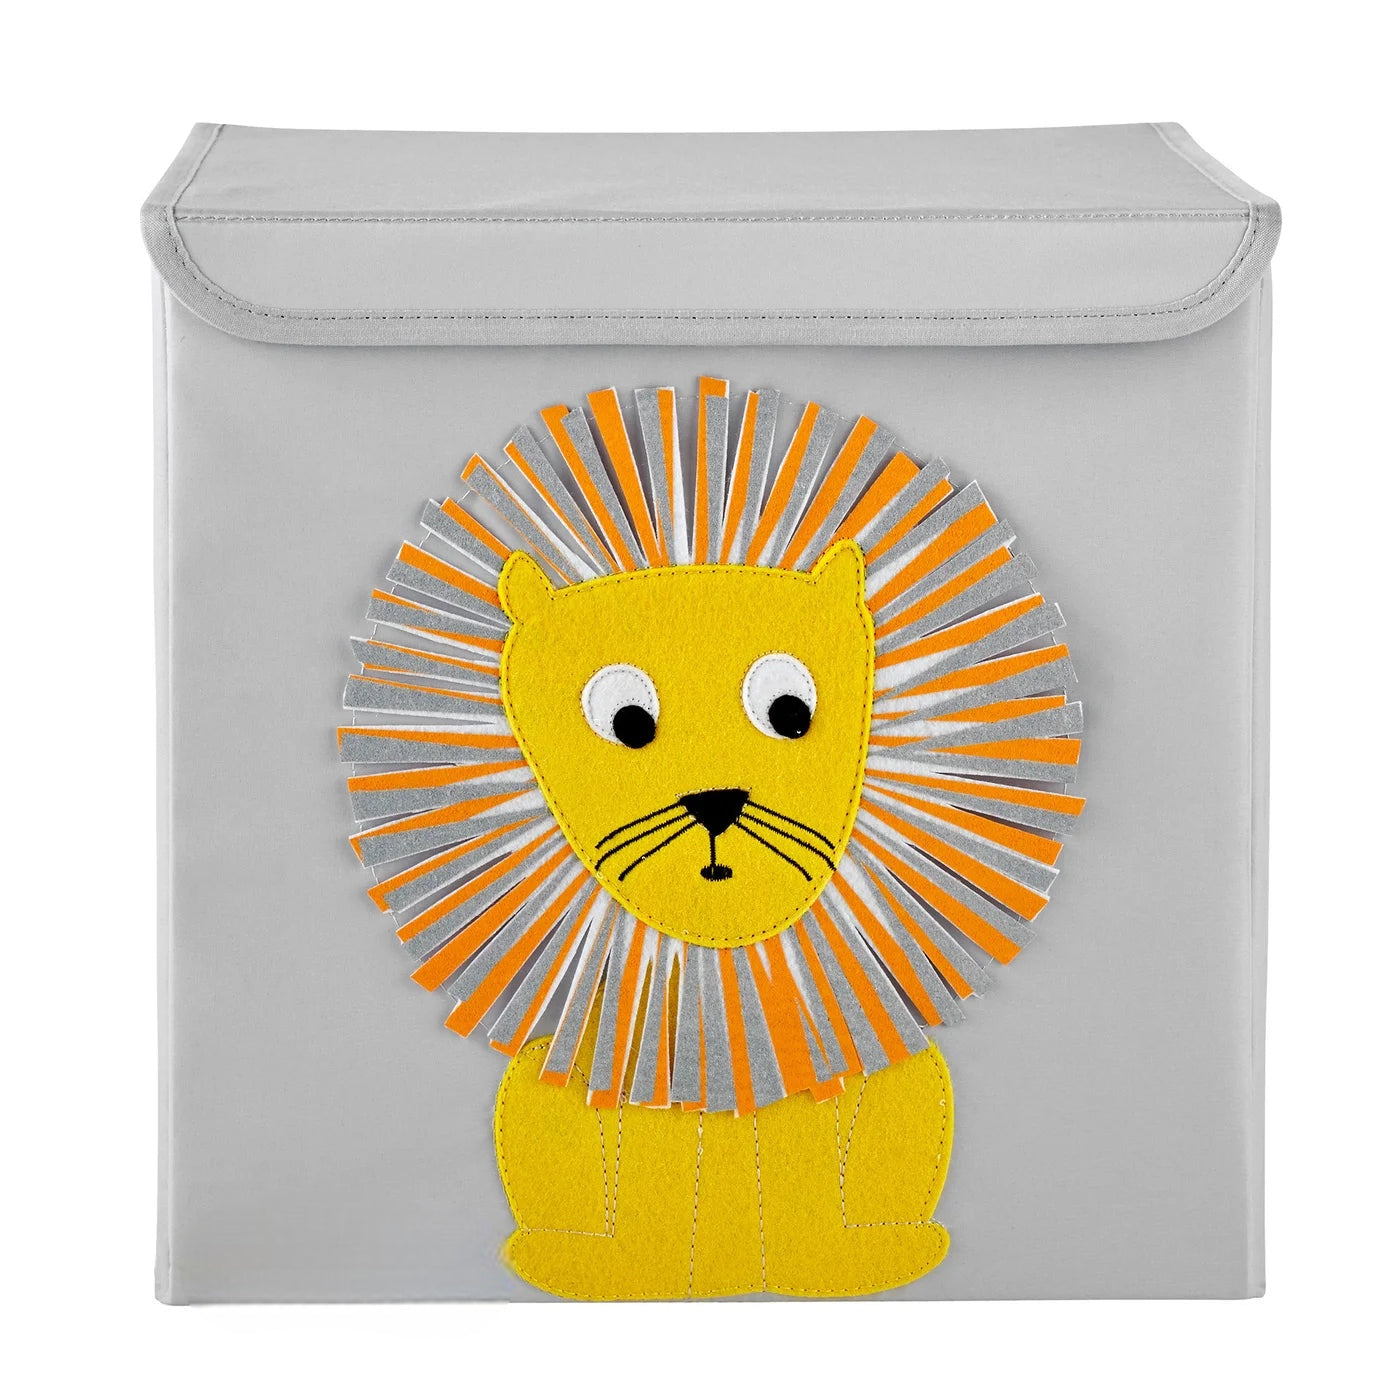 Personalized Storage Box - Lion